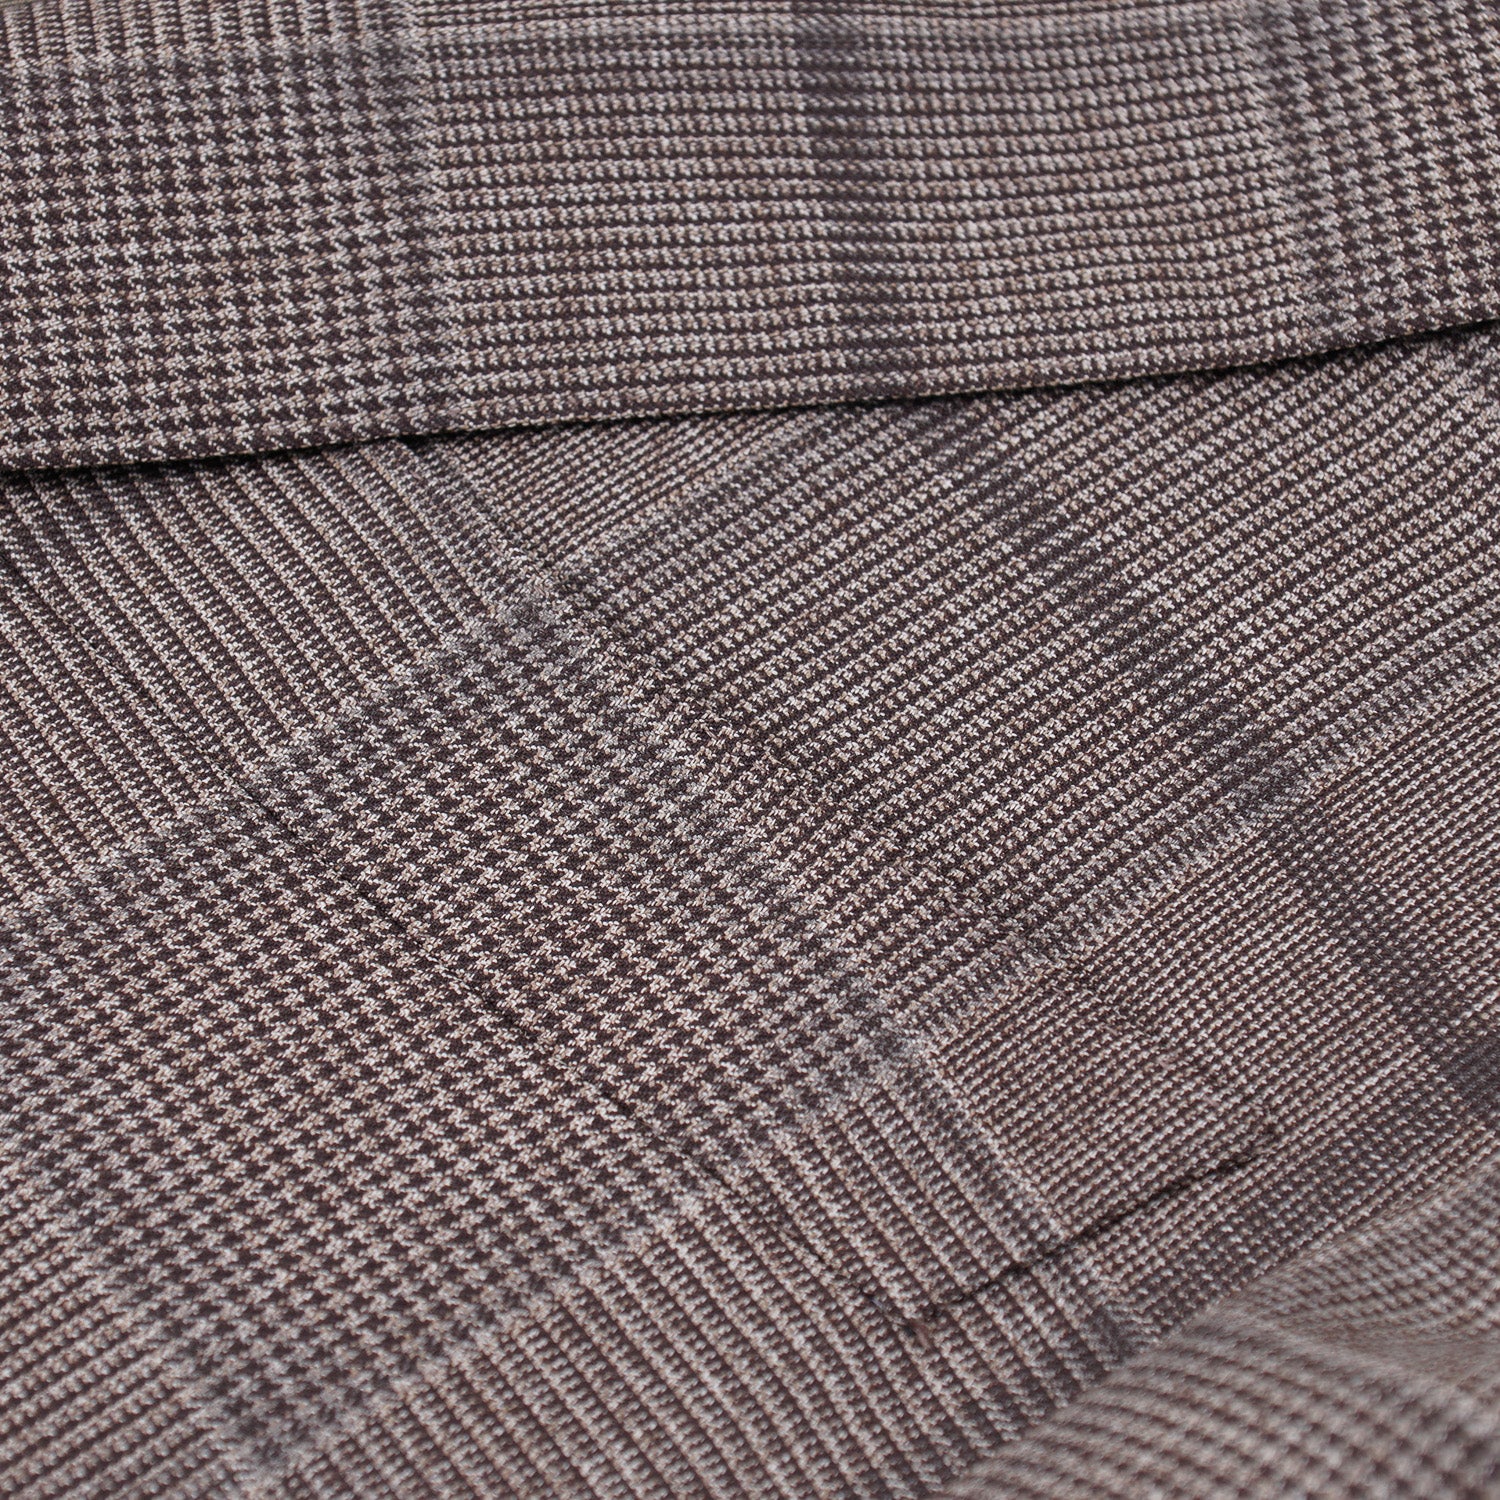 Isaia 'Sanita' Layered Check Wool Suit - Top Shelf Apparel